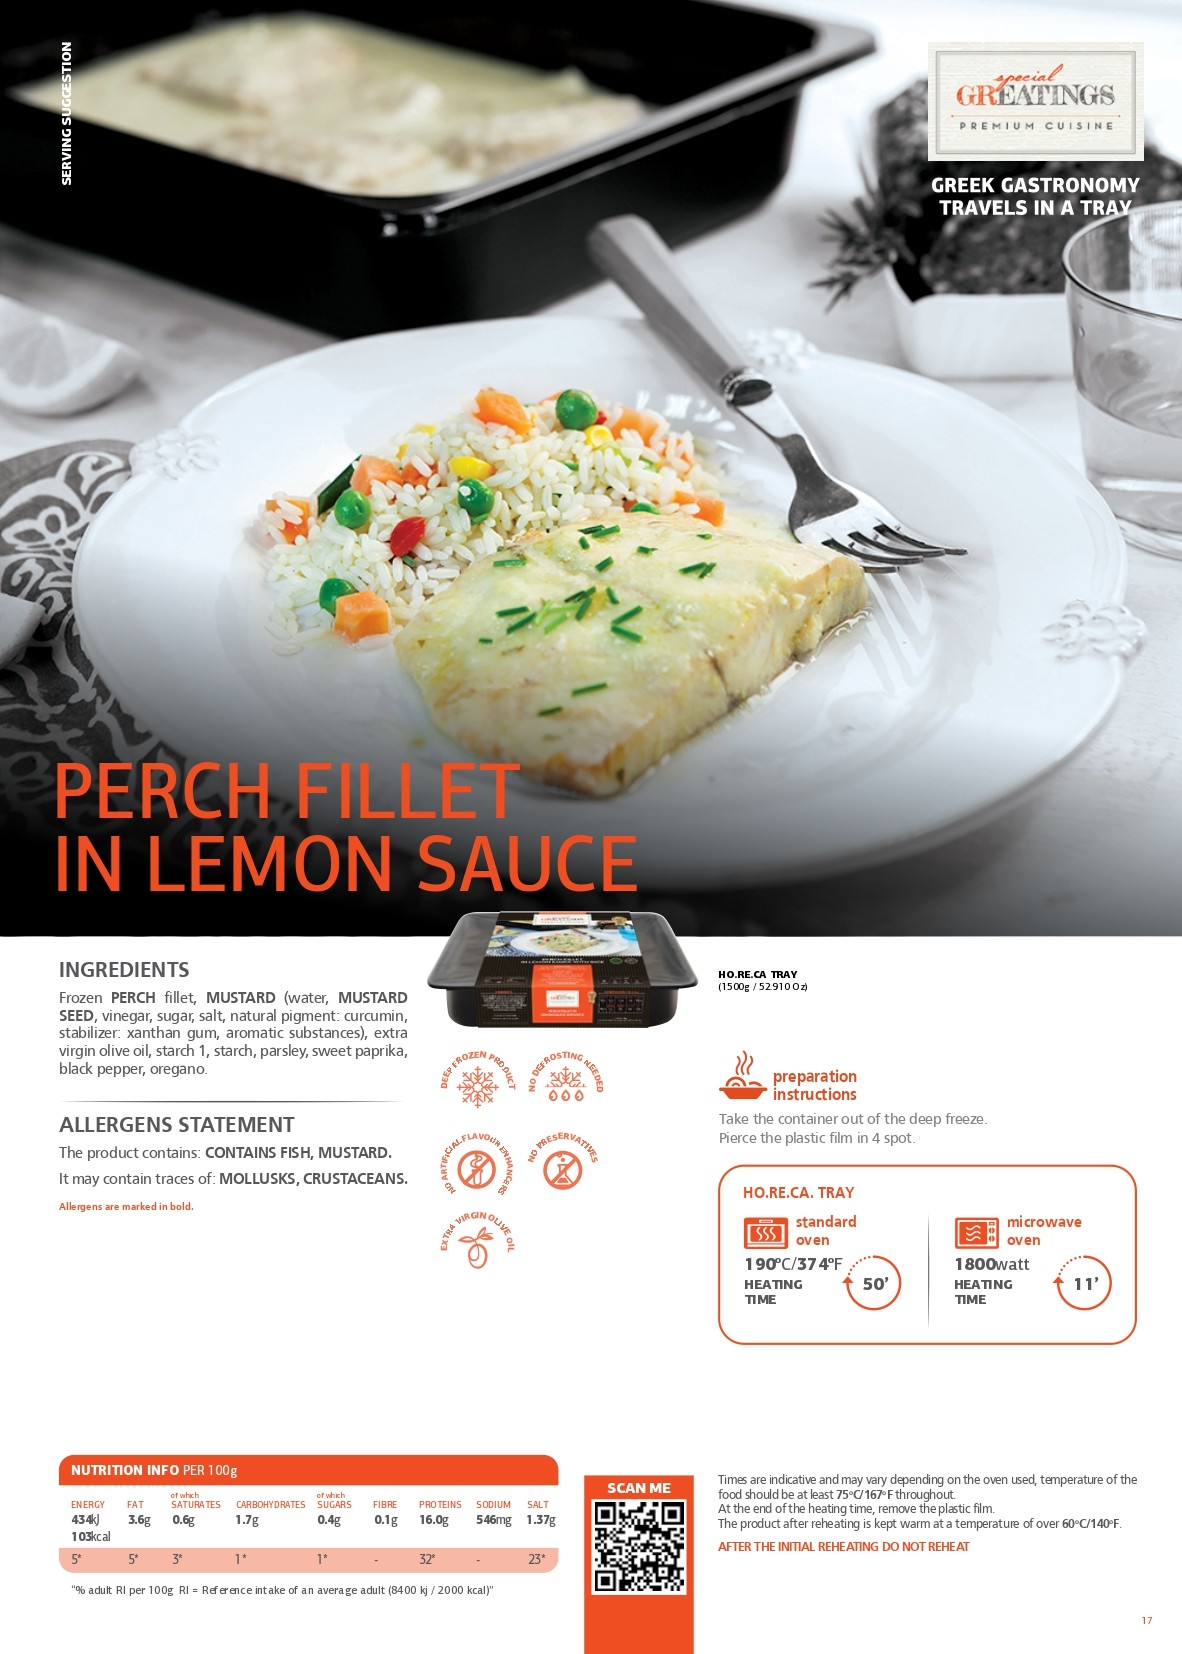 Perch fillet in lemon sauce pdf image